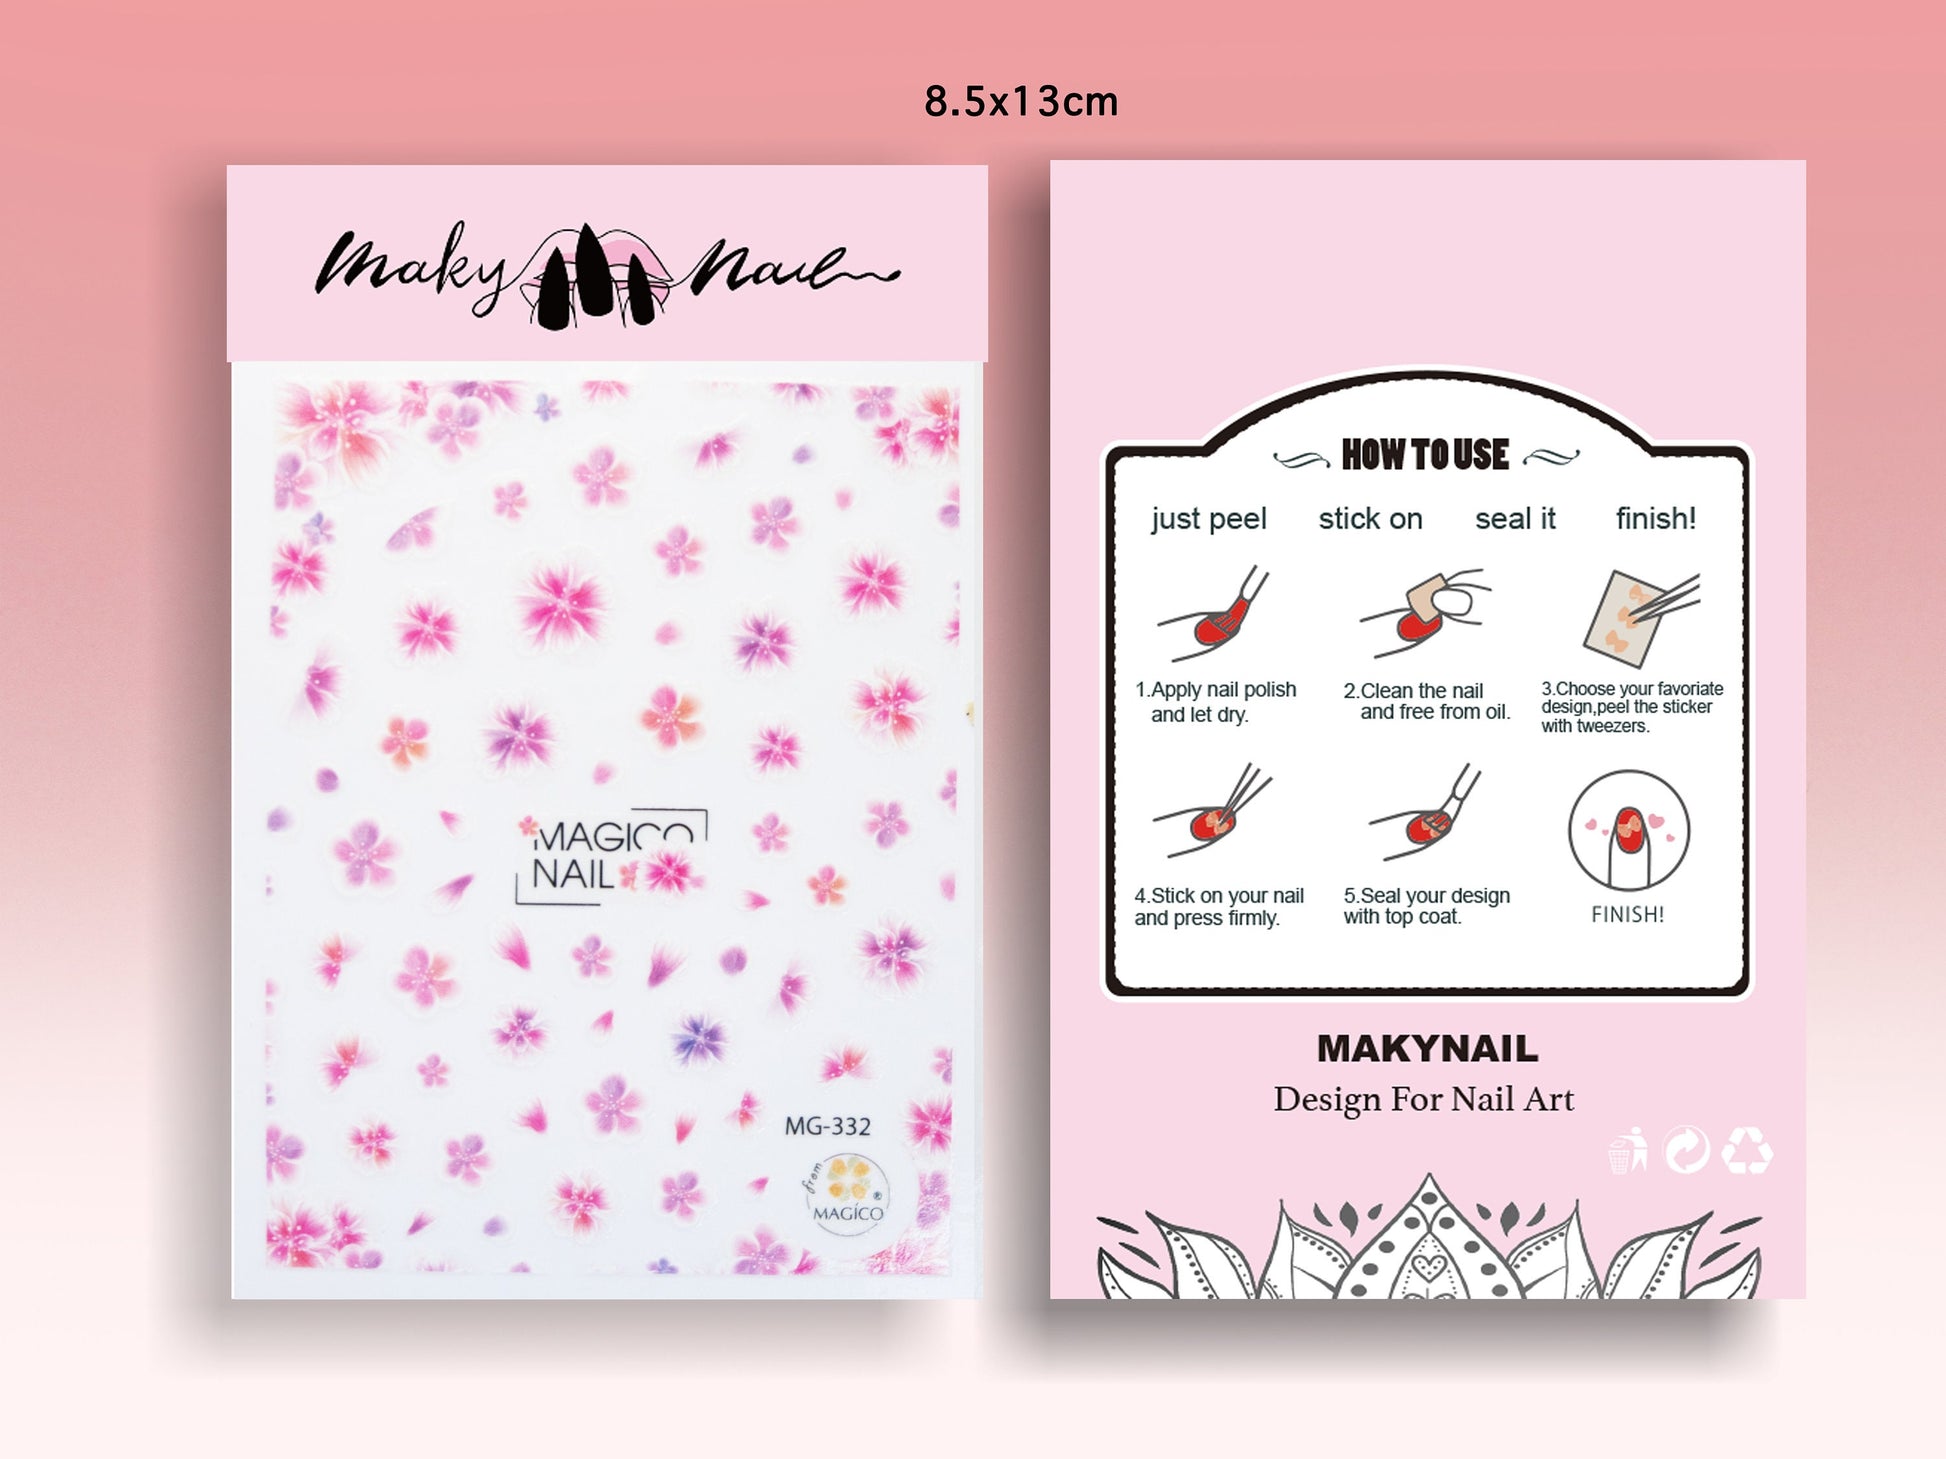 Floral Nail Art Sticker/ DIY Tips Guides Transfer Stickers/ Pink sakura flower Sticker/ plum blossom manicure stencil